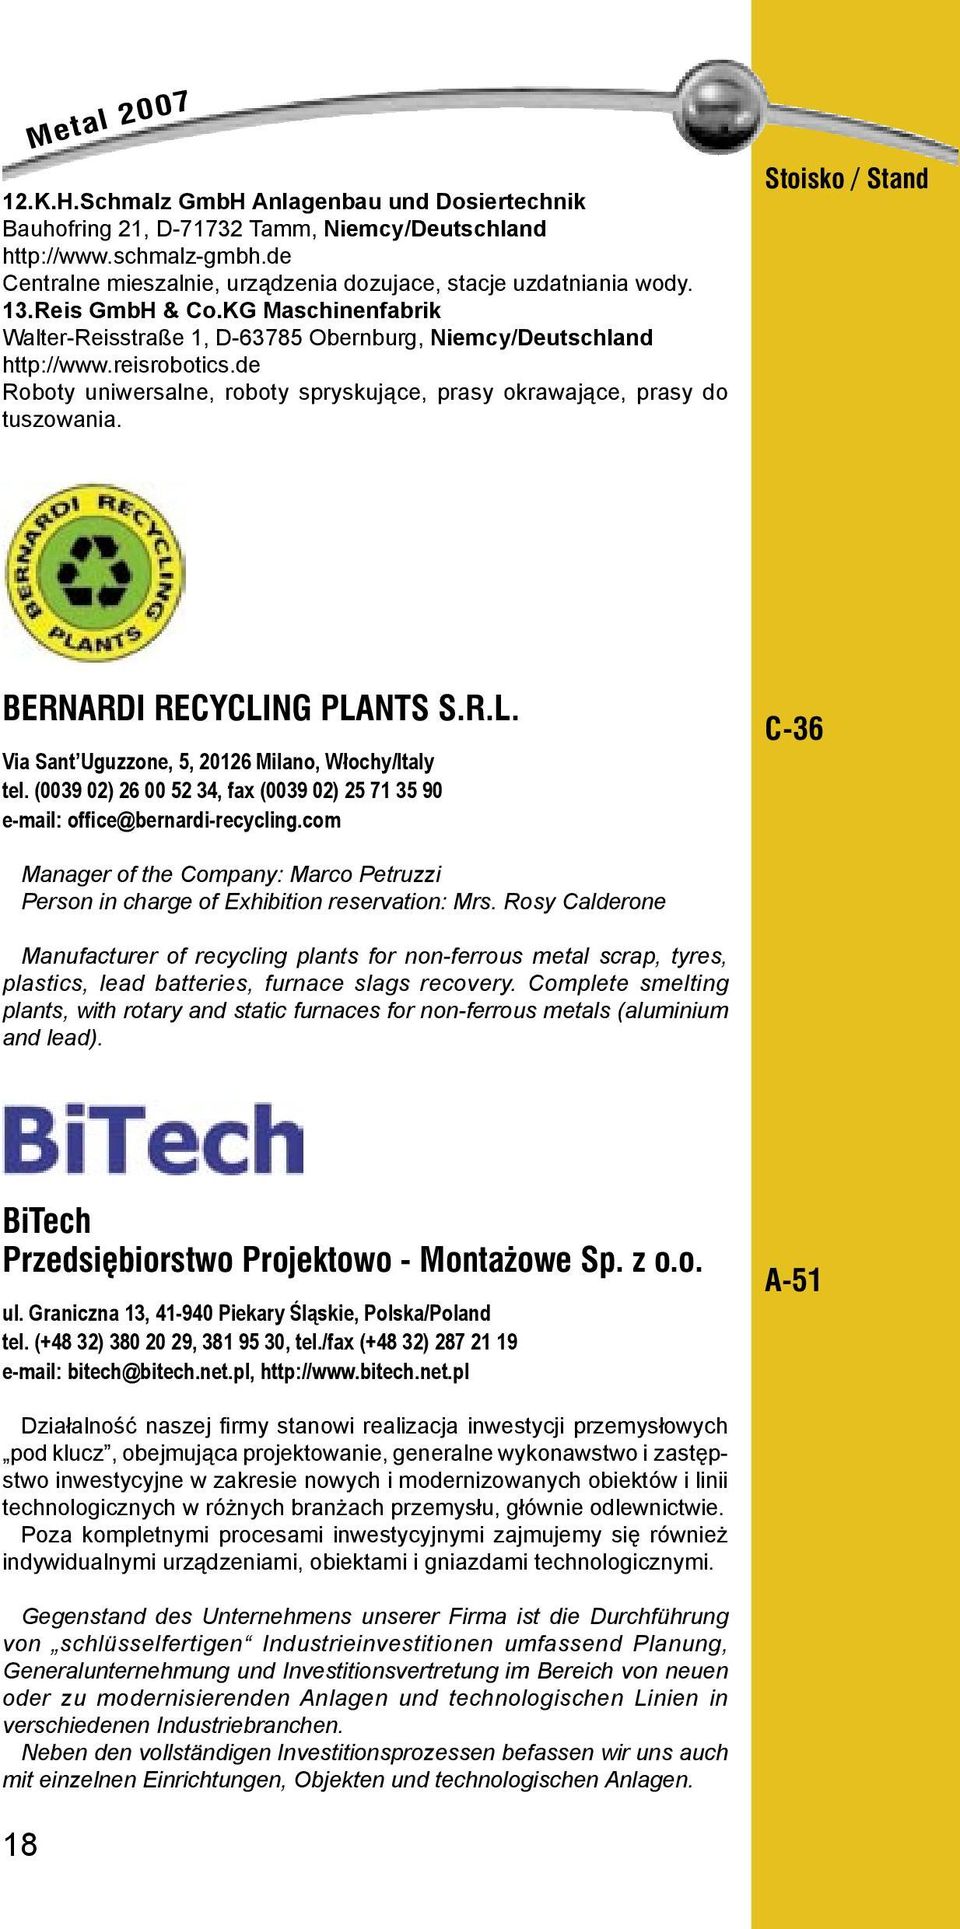 BERNARDI RECYCLING PLANTS S.R.L. Via Sant Uguzzone, 5, 20126 Milano, Włochy/Italy tel. (0039 02) 26 00 52 34, fax (0039 02) 25 71 35 90 e-mail: office@bernardi-recycling.